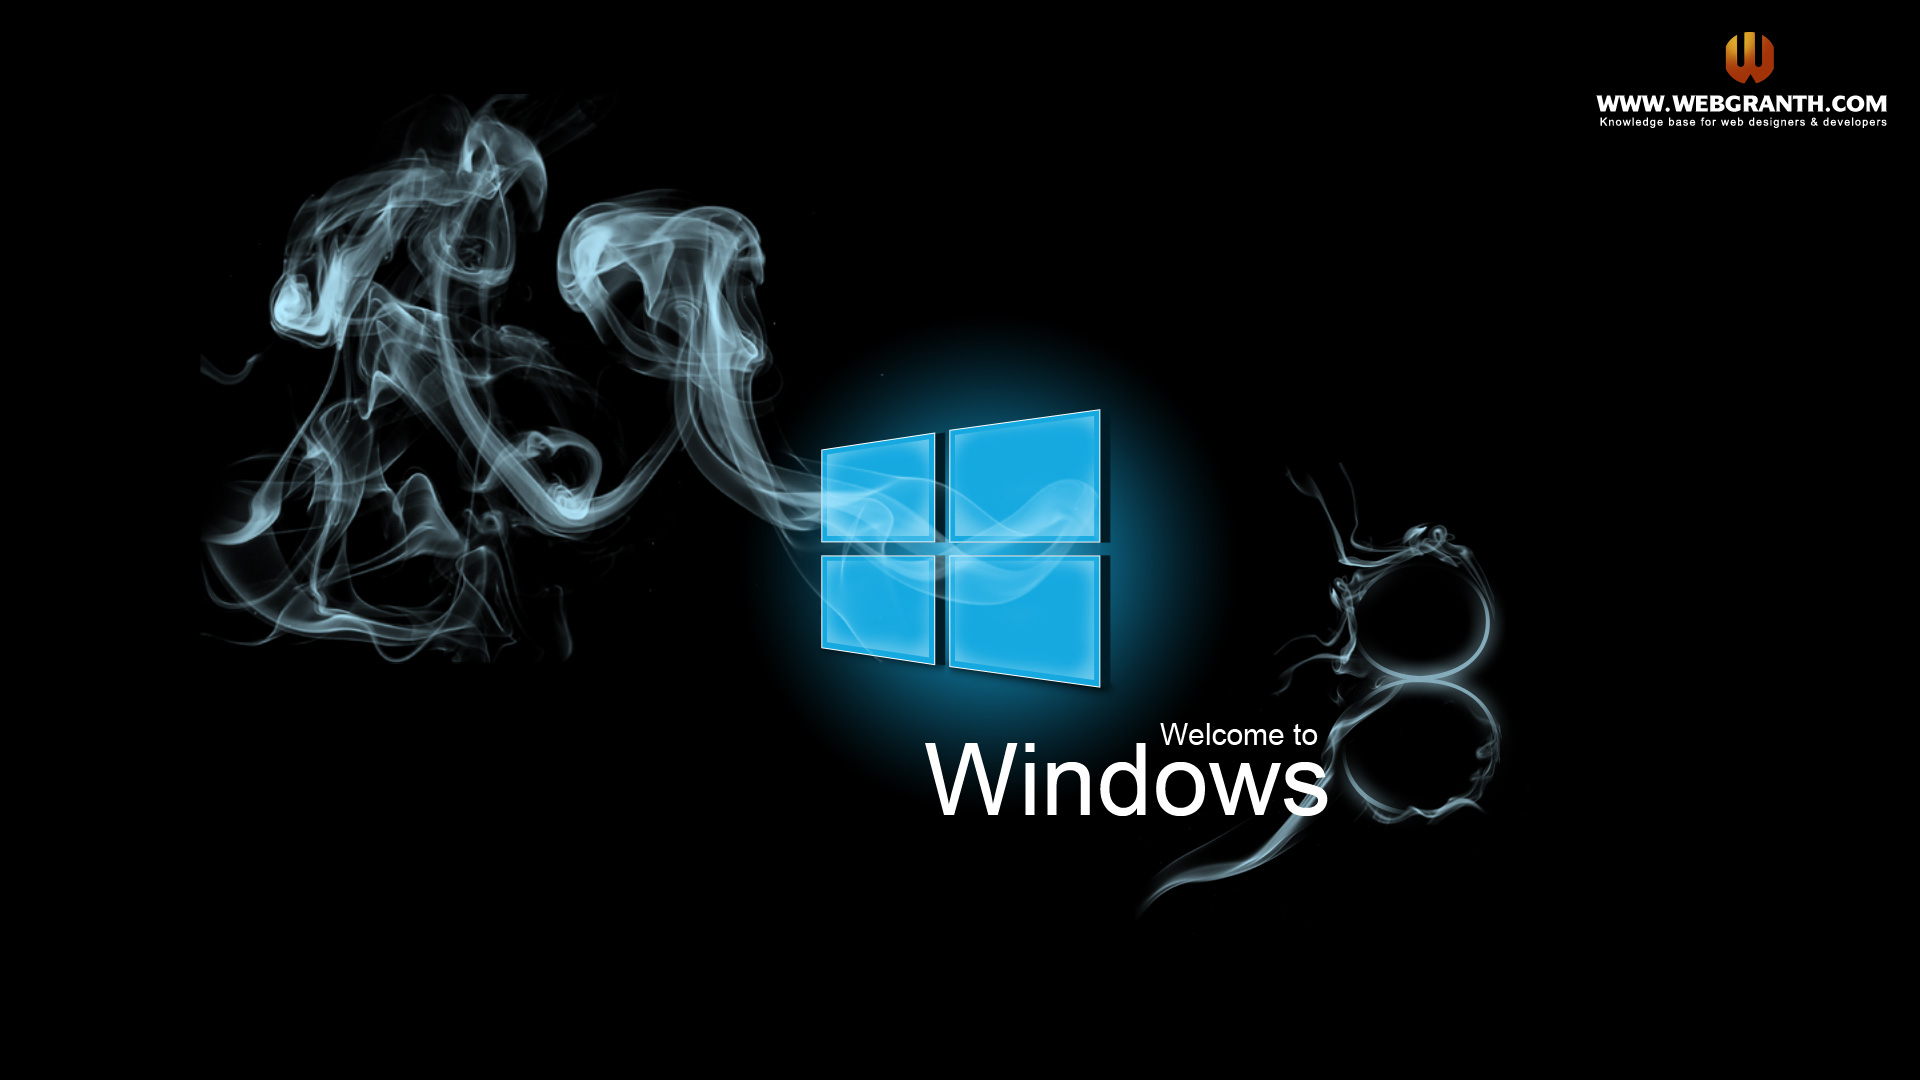 Free Windows 8 Wallpaper Backgrounds HD Widescreen Backgrounds